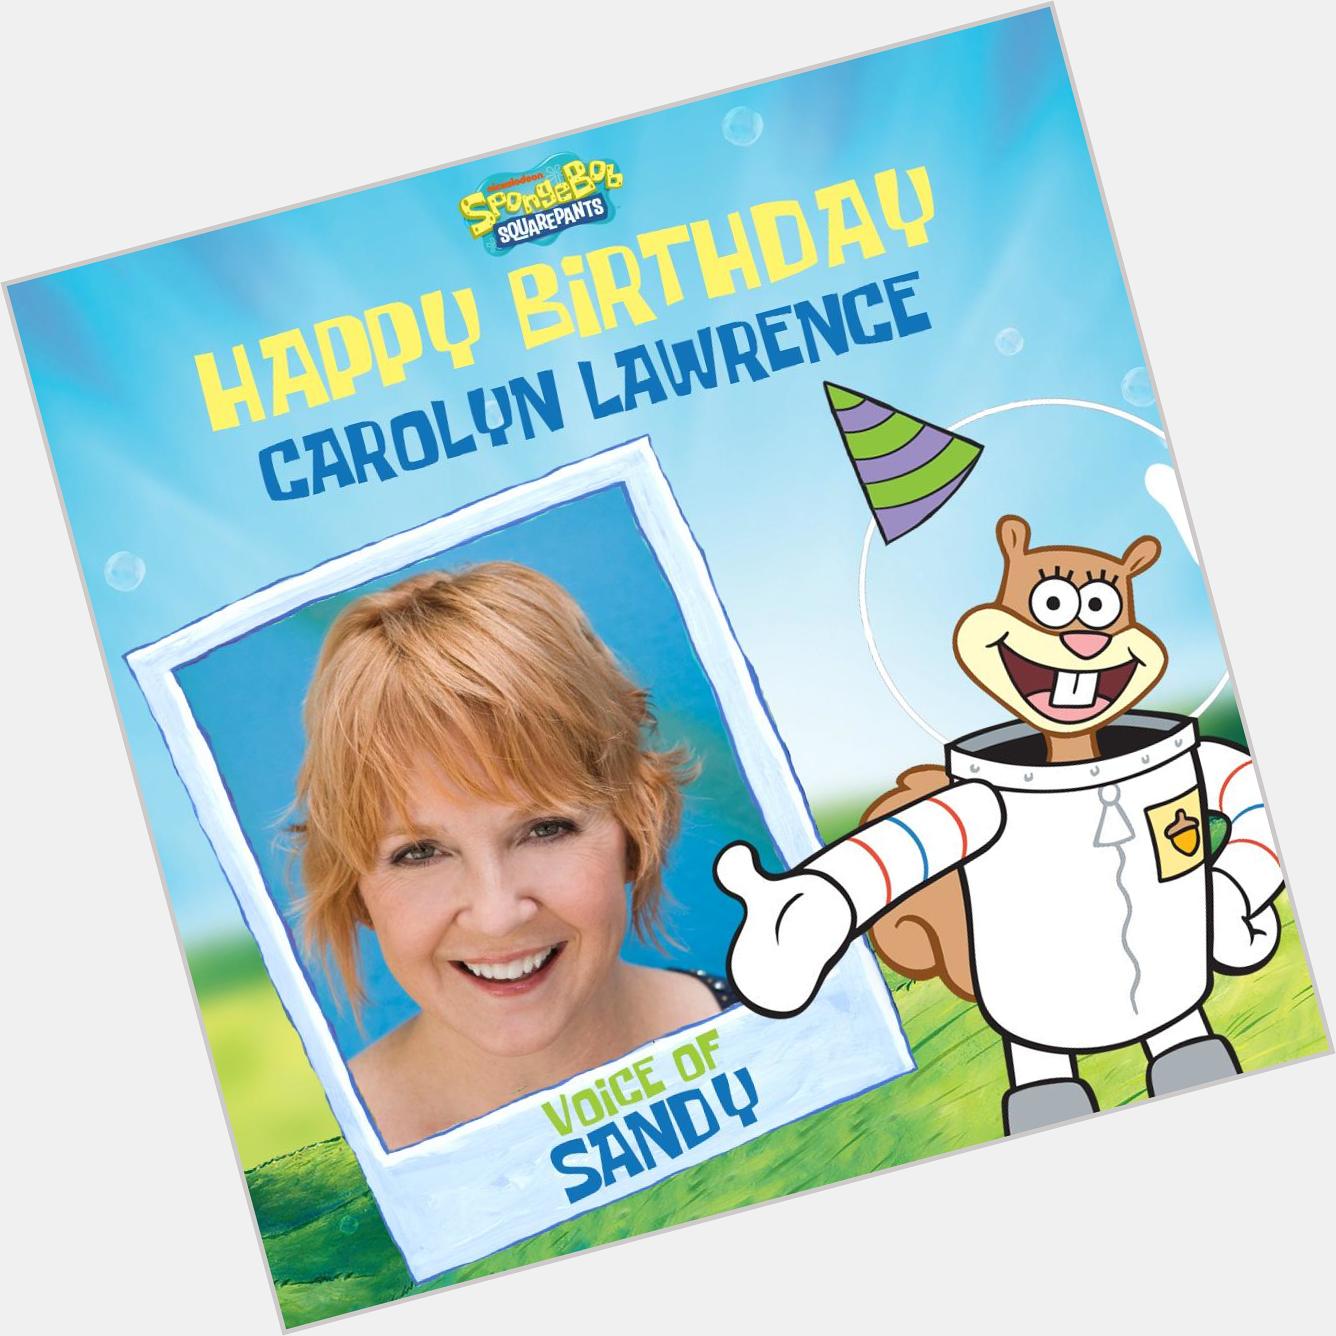 Yee-haw! Happy Birthday Carolyn Lawrence, voice of Sandy! 